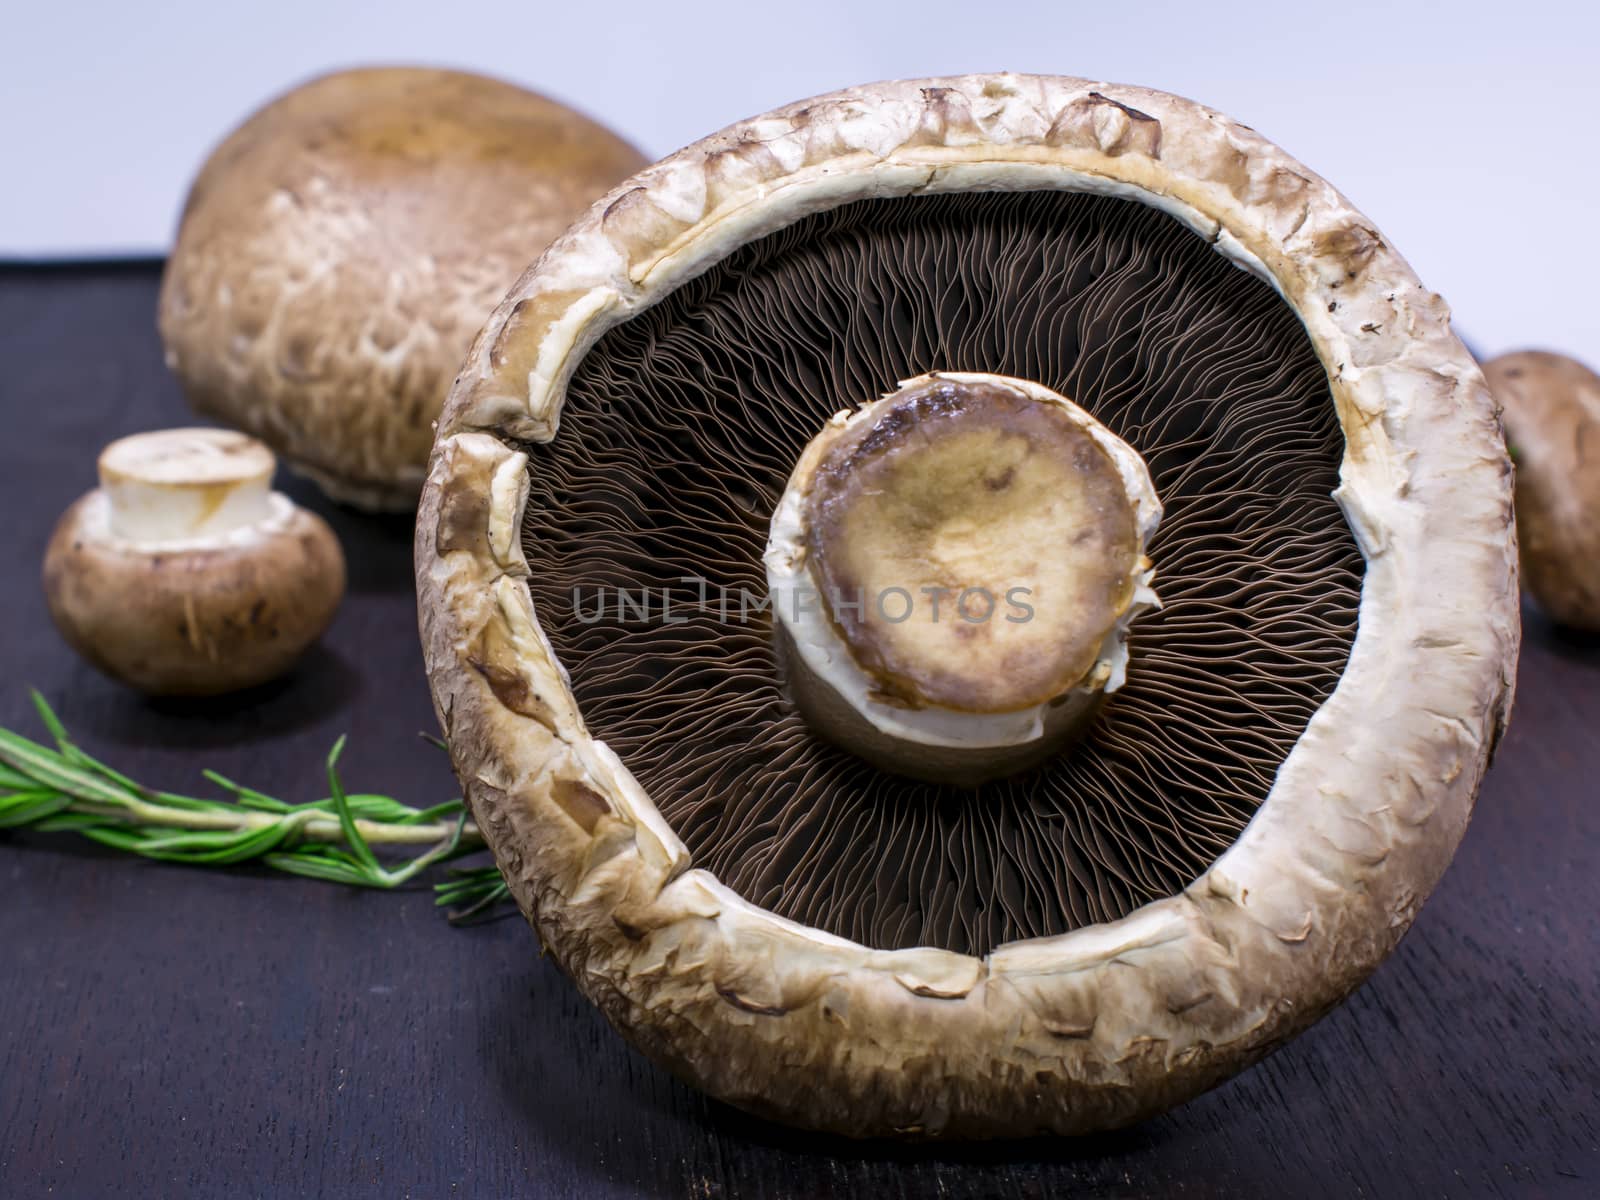 Huge Portobello Mushroom on Display with all its Glory by seika_chujo